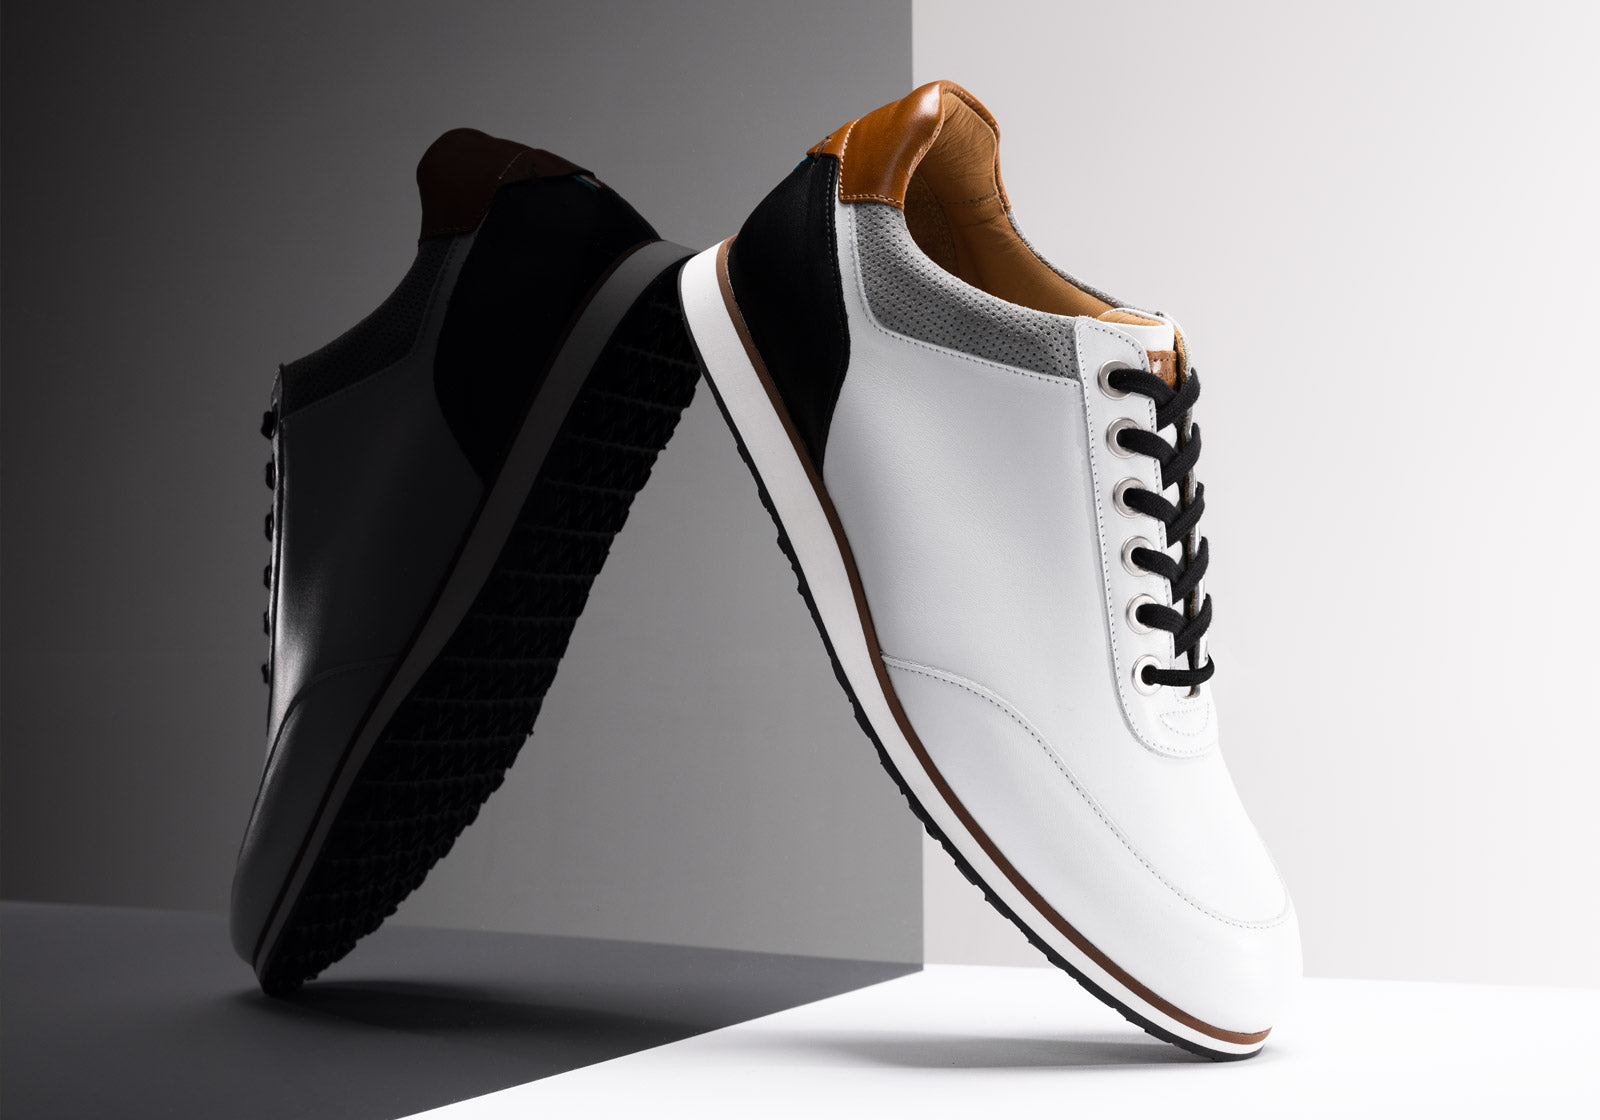 Review: Royal Albartross Strider Monochrome Hybrid Golf Shoes